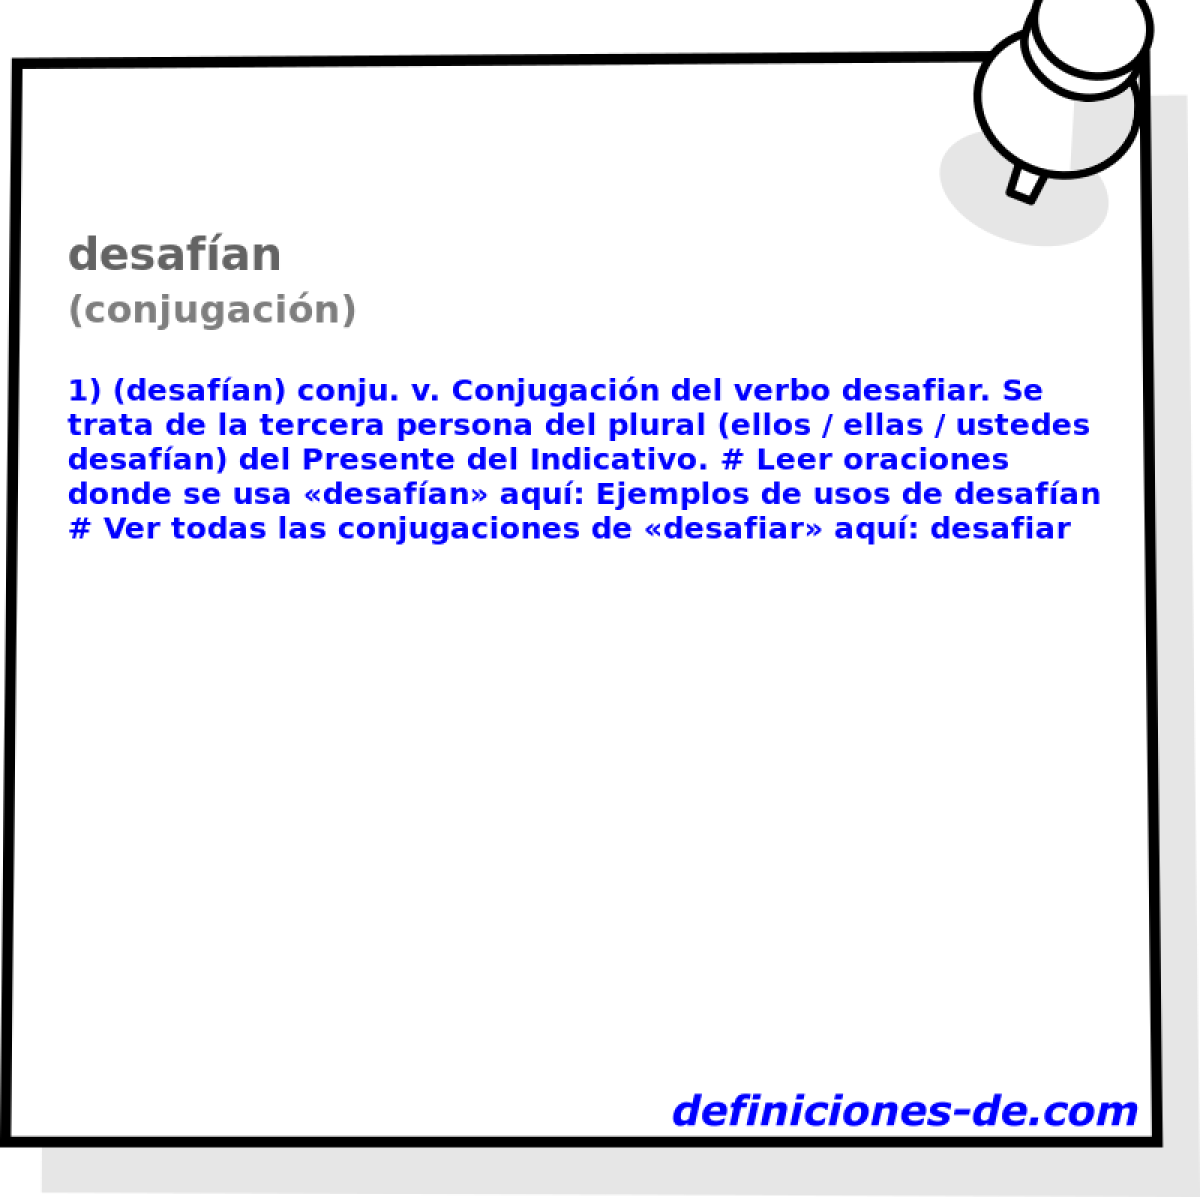 desafan (conjugacin)